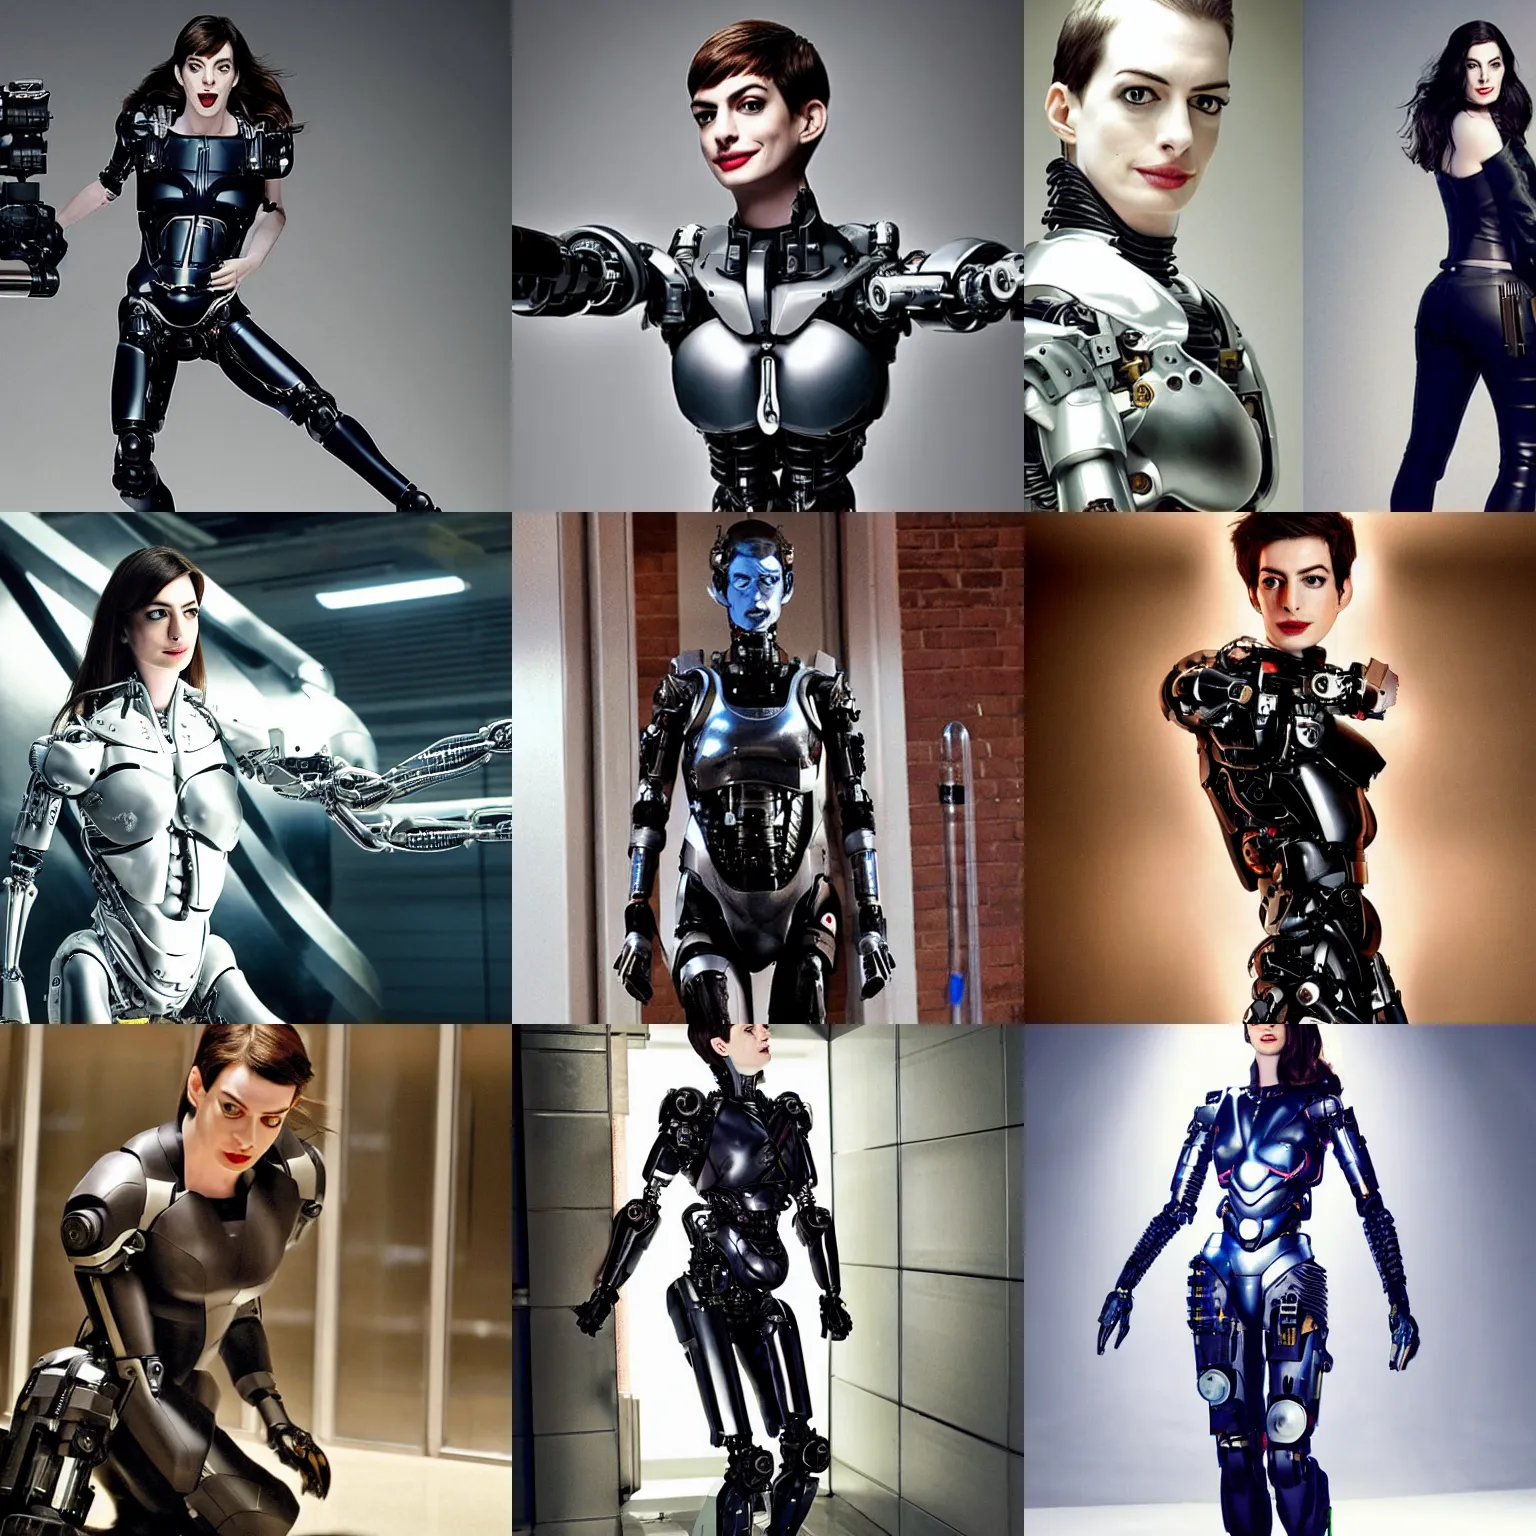 Prompt: anne hathaway as hybrid cyborg, photo, fullbody, long shot